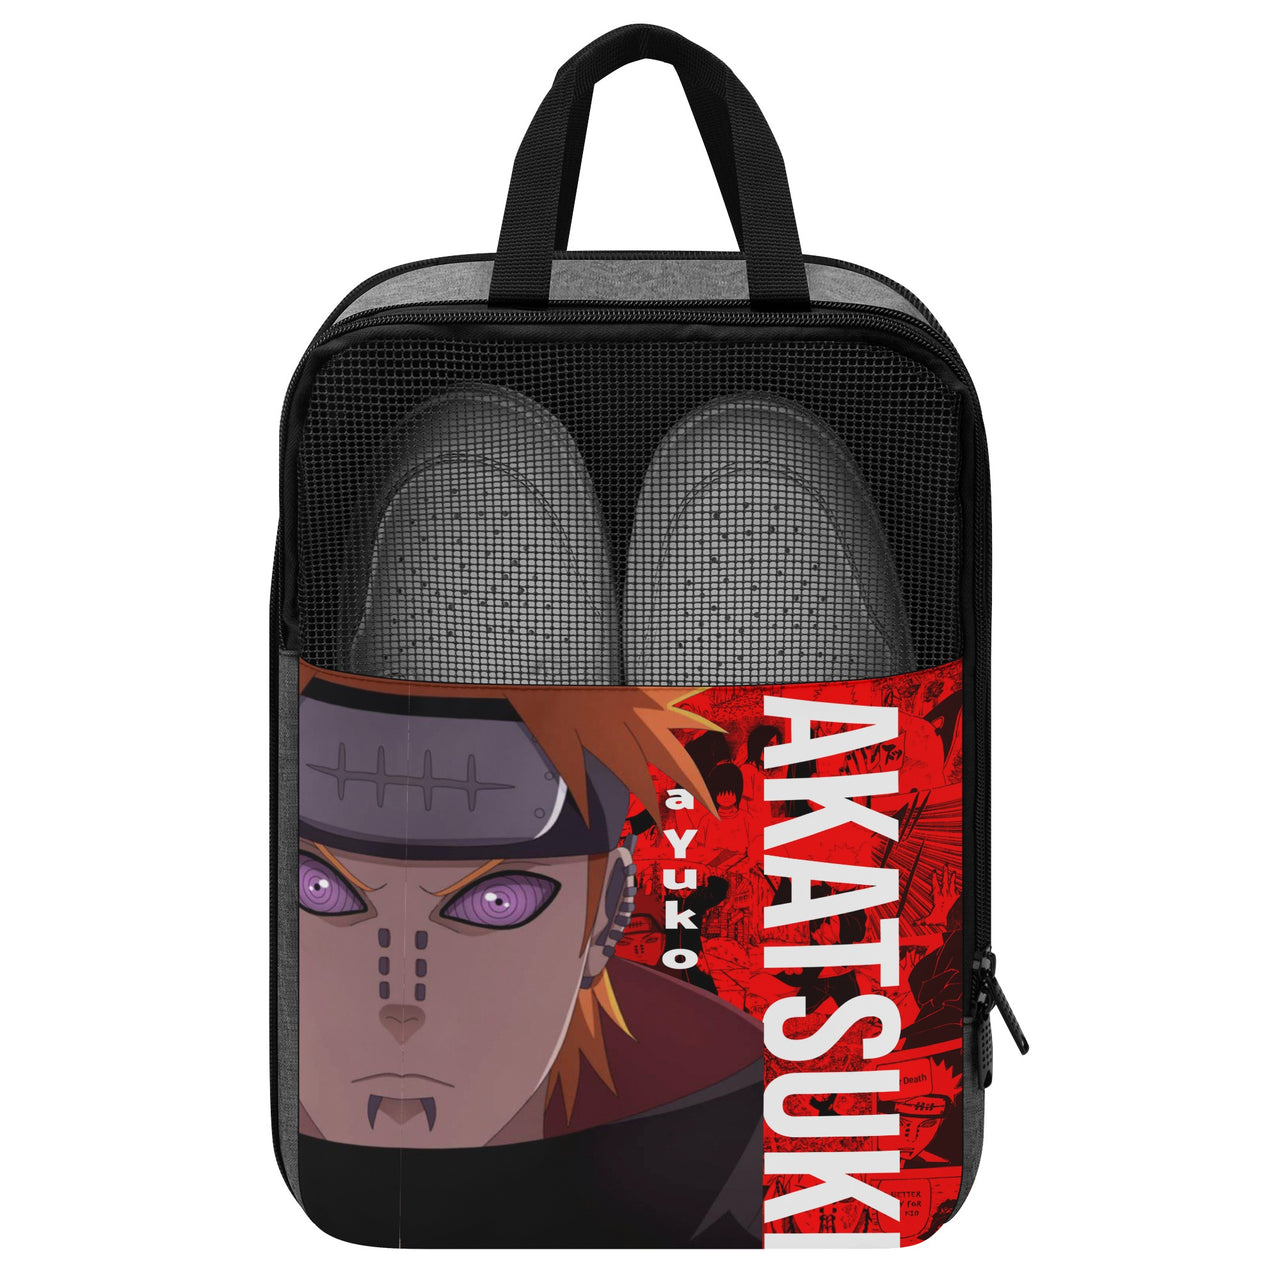 Borsa per scarpe del clan Naruto Akatsuki Anime